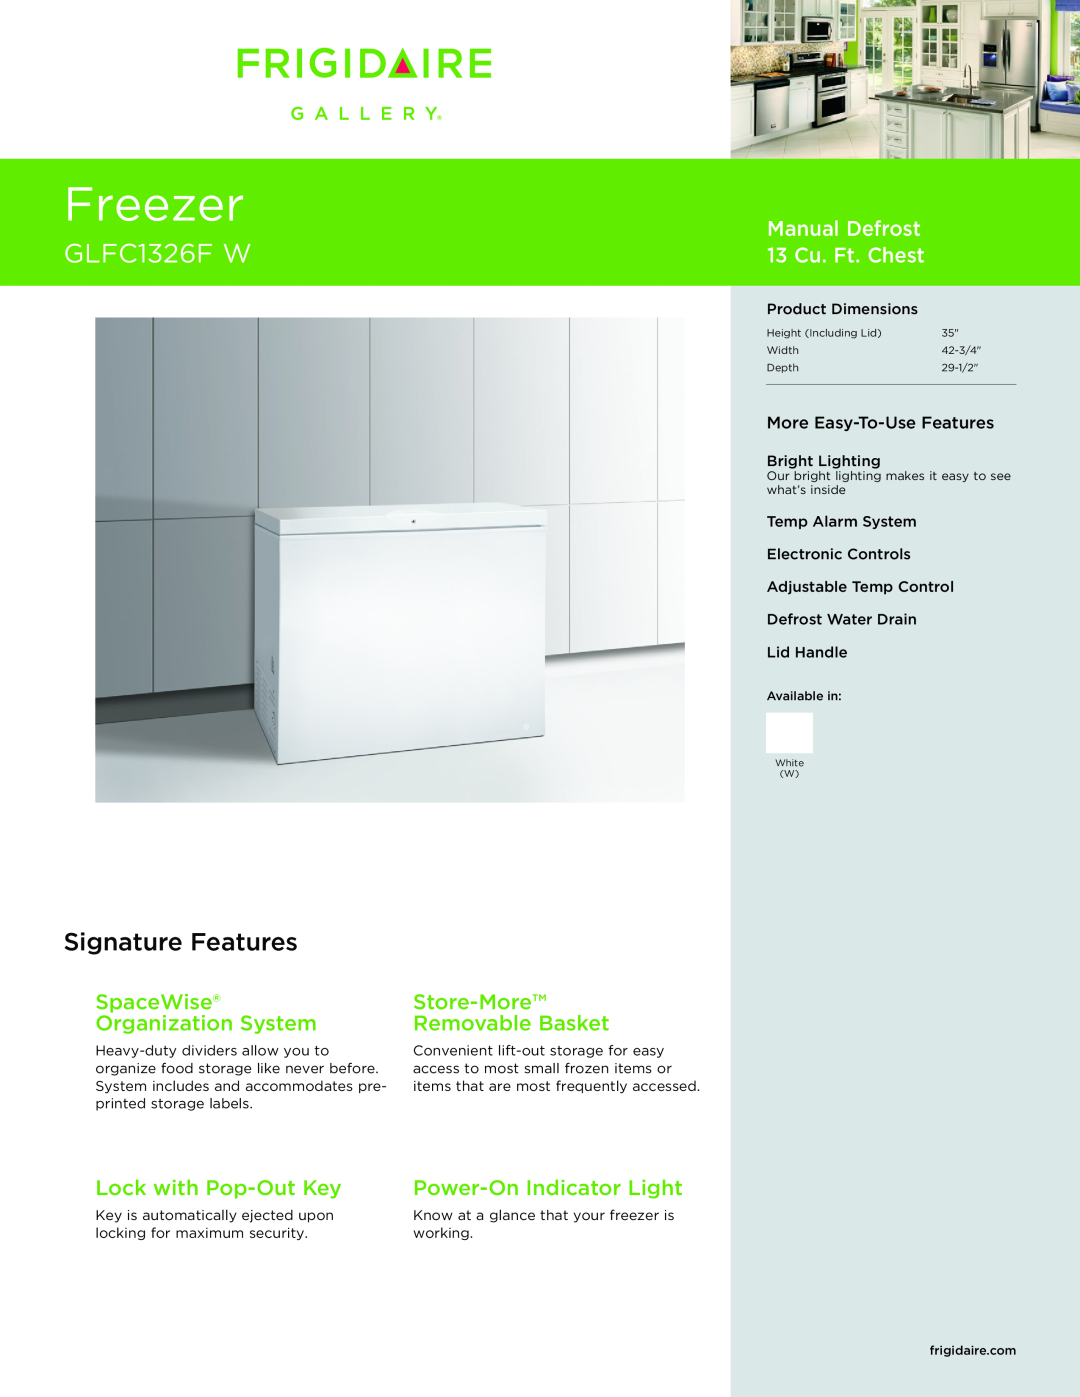 Frigidaire GLFC1326FW dimensions Freezer, GLFC1326F W, Signature Features, Manual Defrost 13 Cu. Ft. Chest, working 